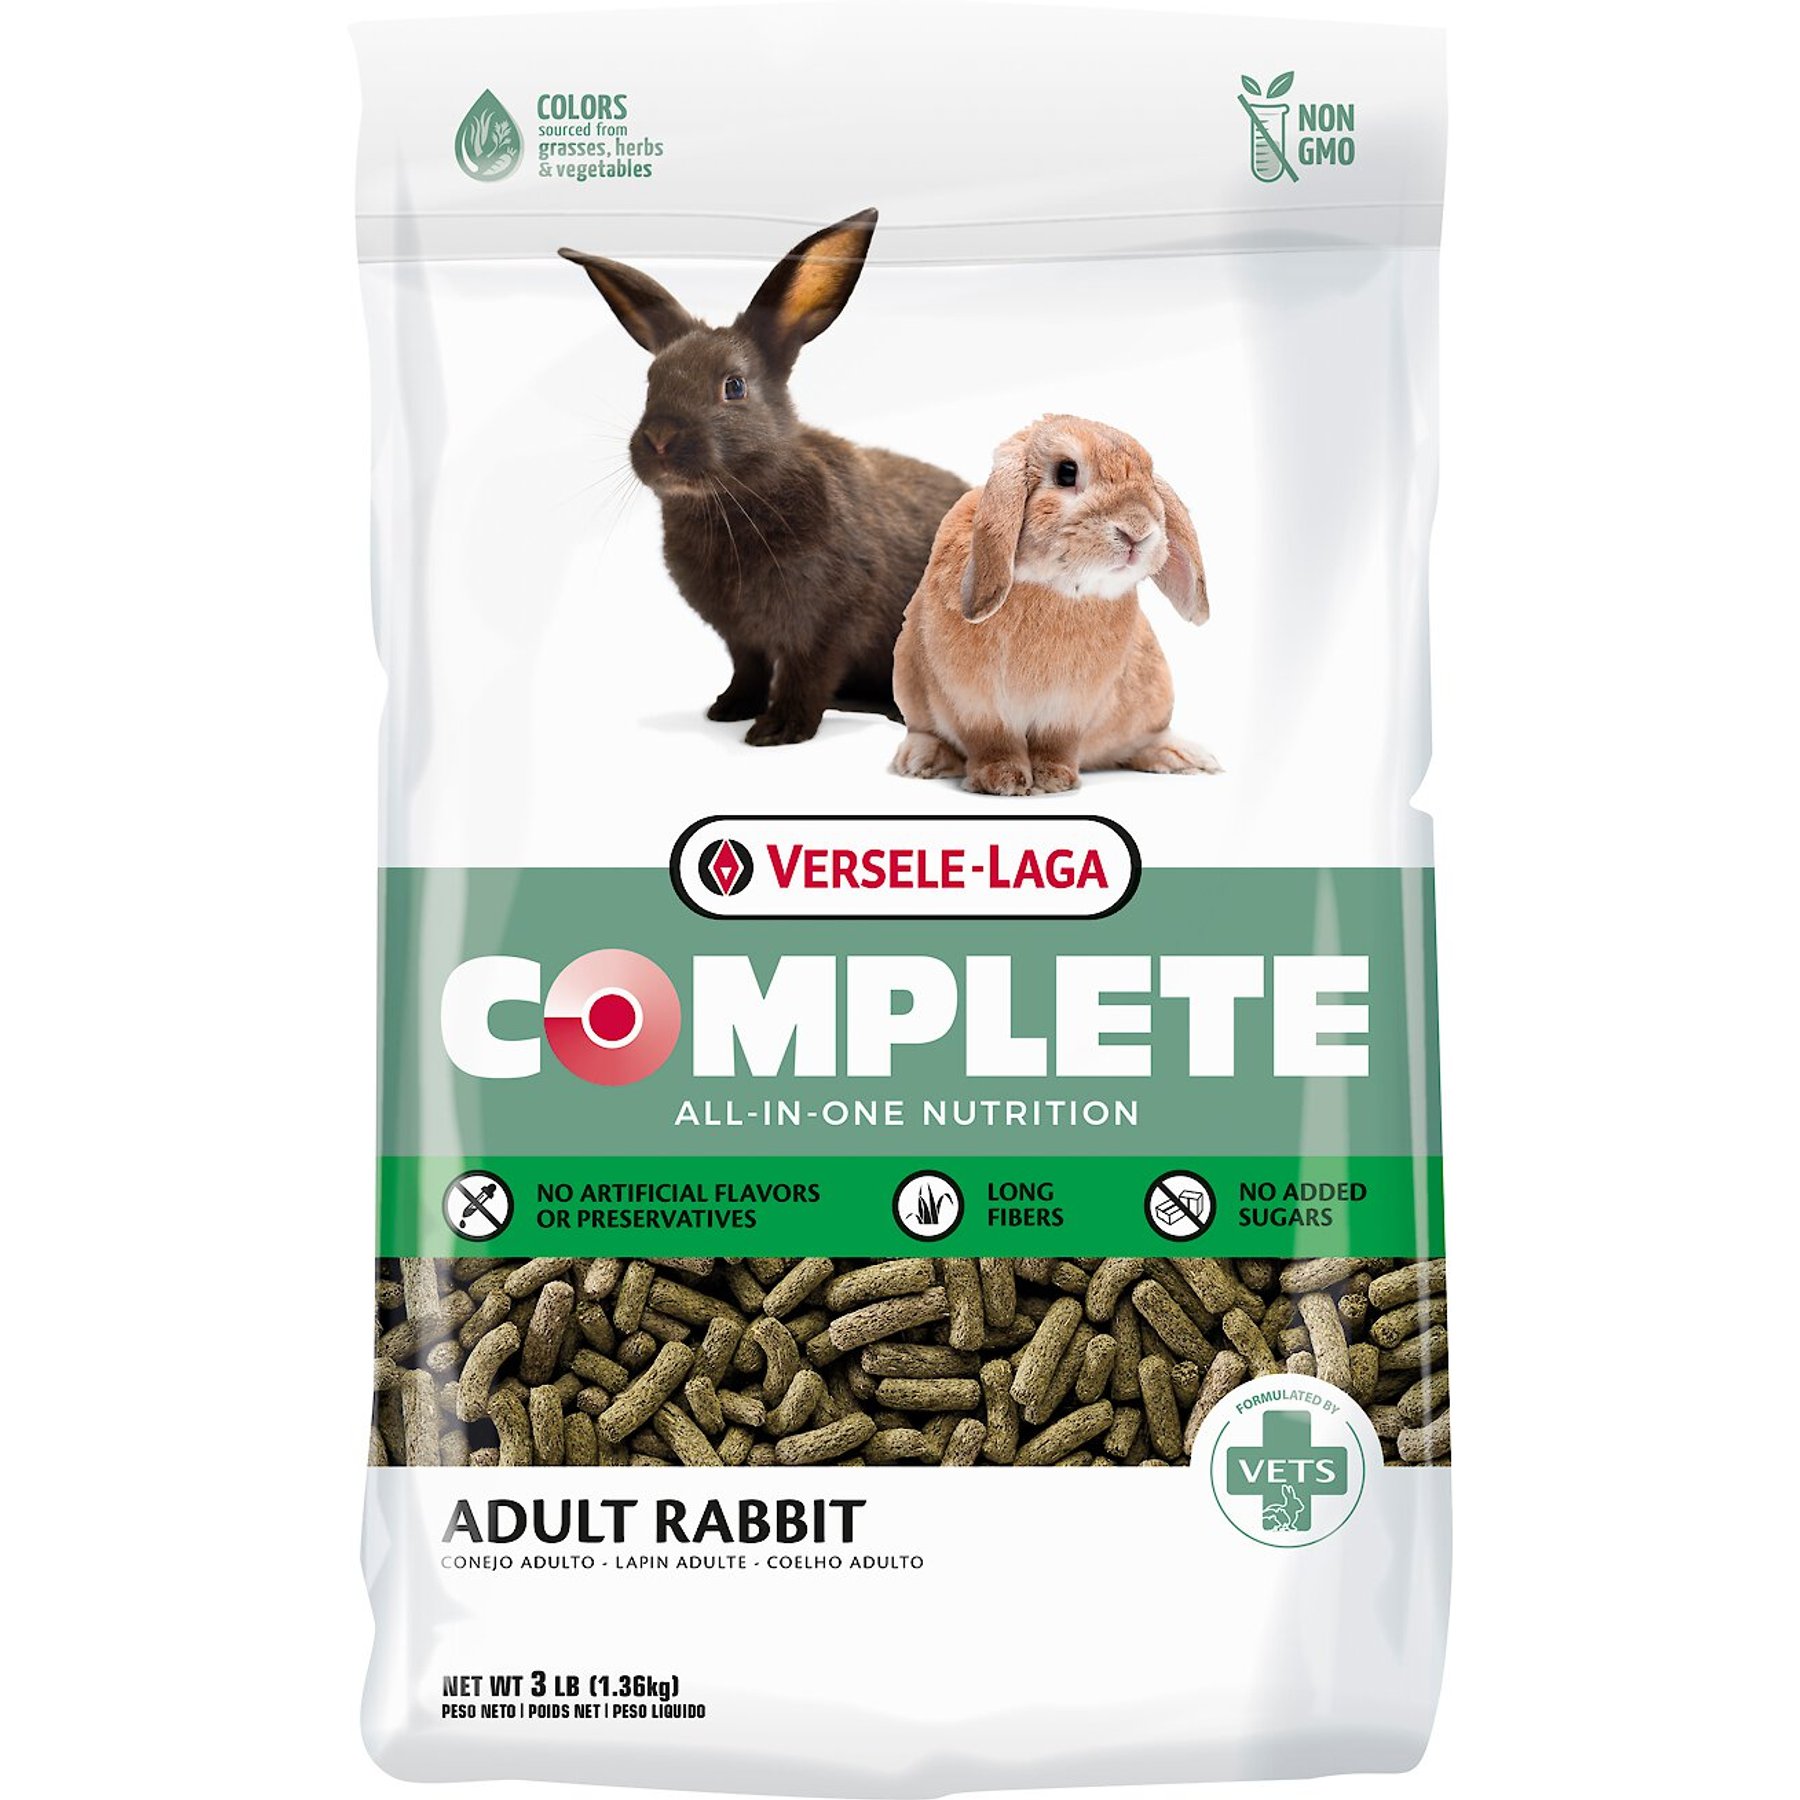 Versele-Laga Cuni Sensitive Complete - Nourriture pour lapins 1.75